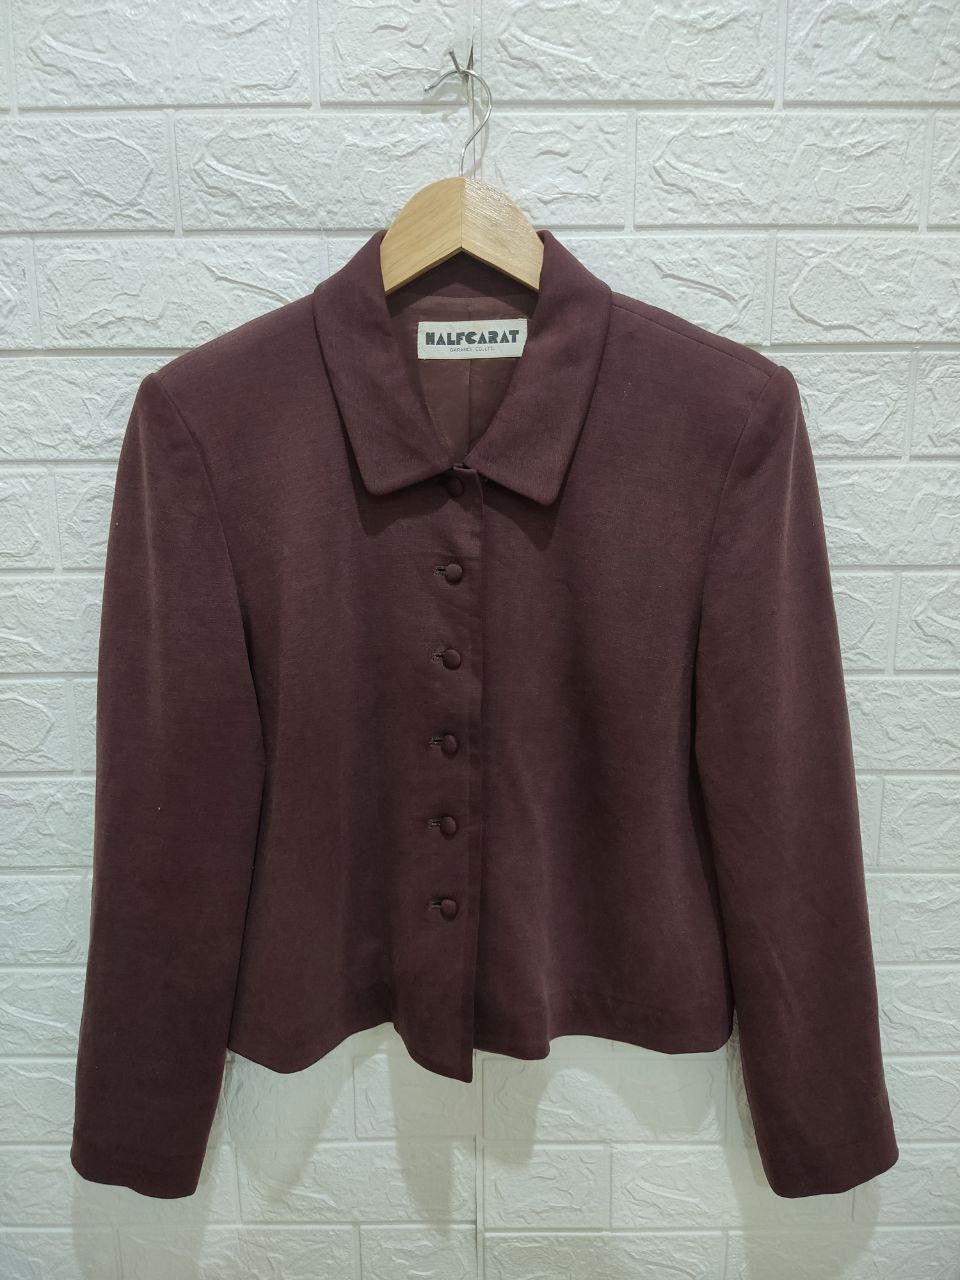 Vintage Halfcarat Cupra Women Shirt Made in Japan - 2